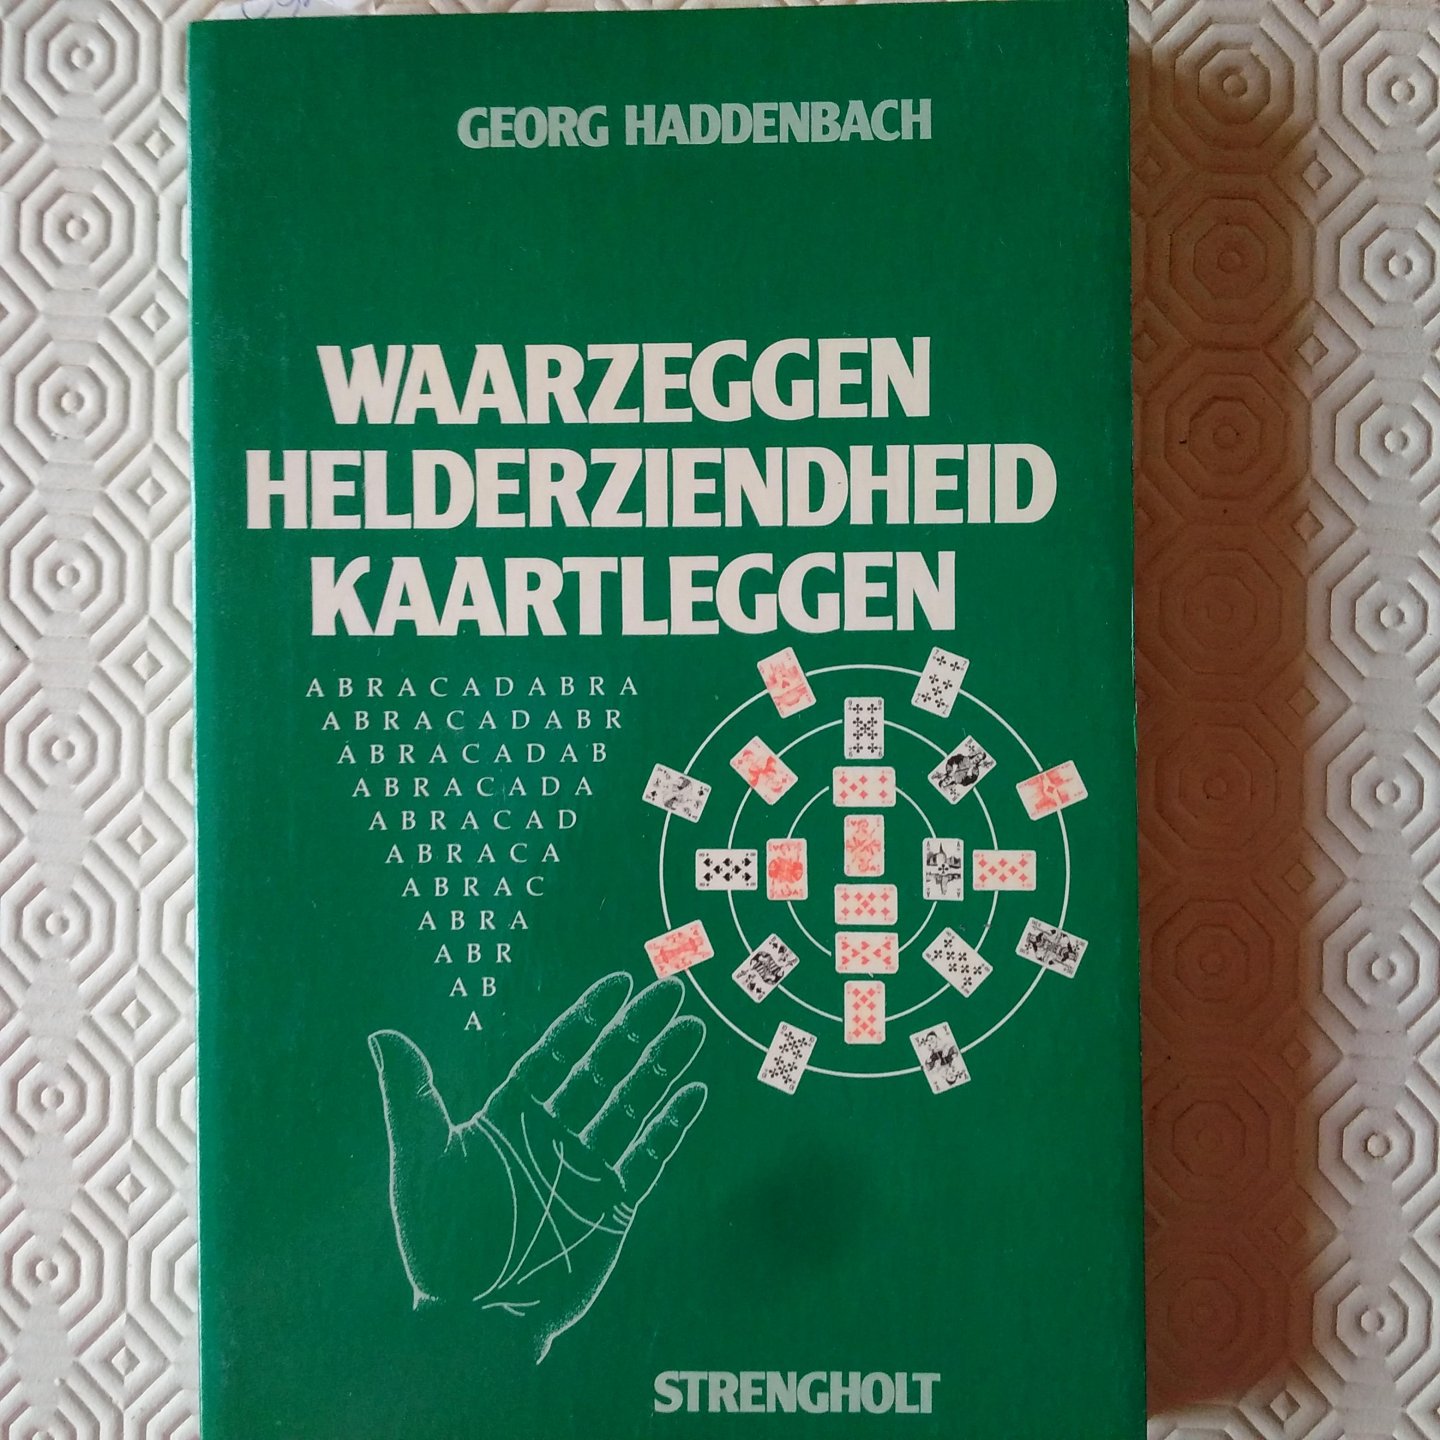 Haddenbach, Georg - Waarzeggen helderziendheid kaartleggen